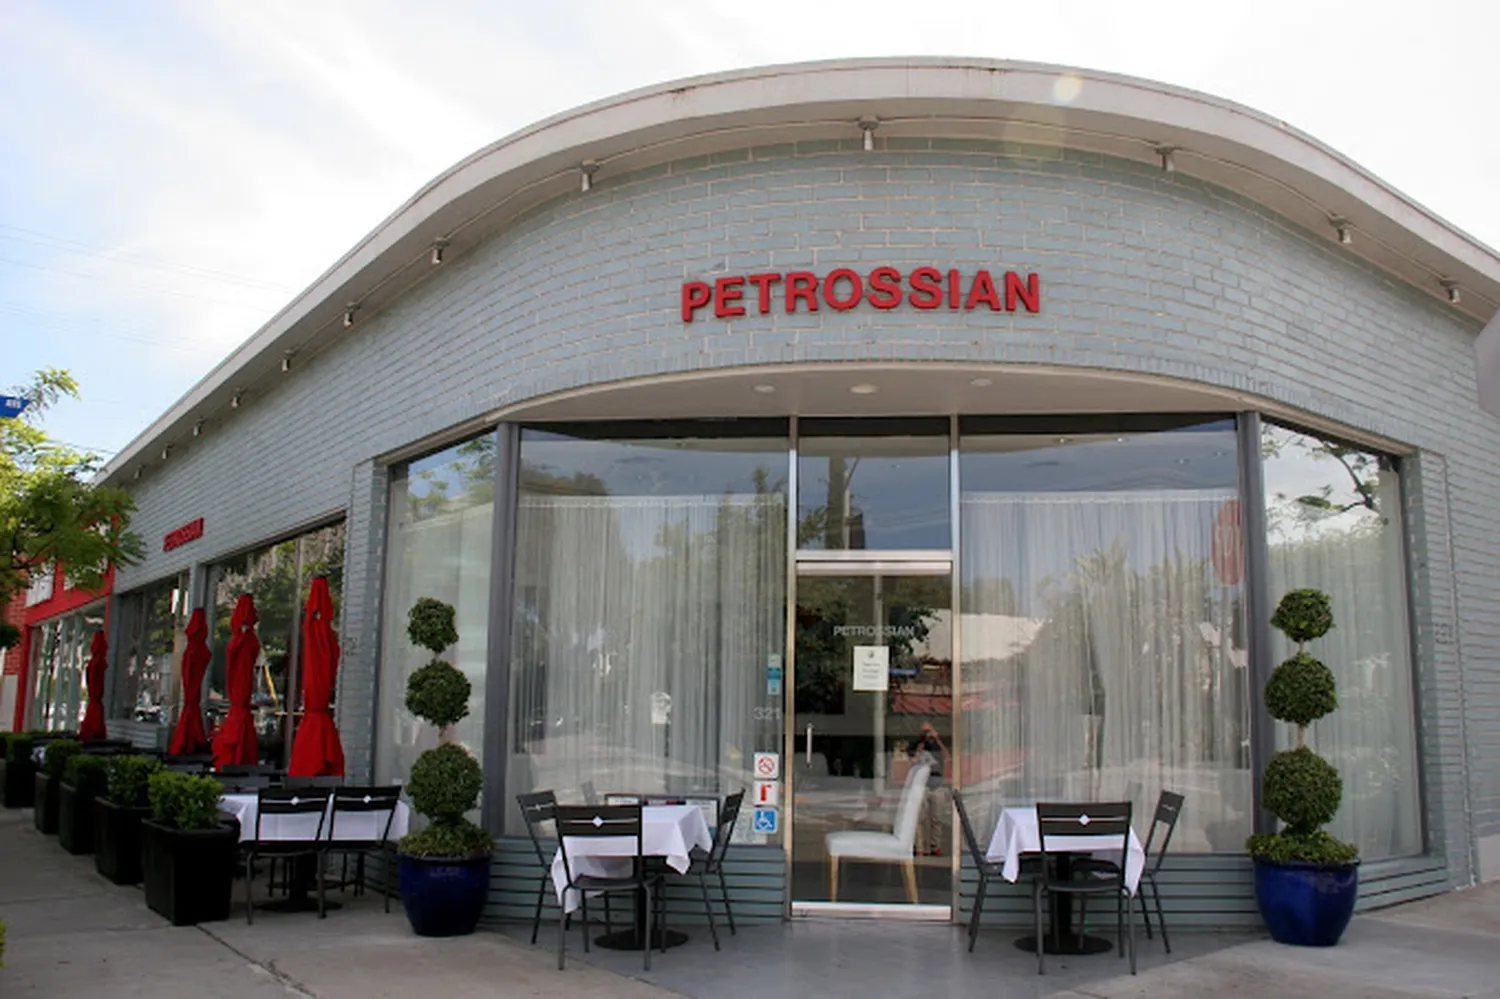 Petrossian restaurant Los Angeles